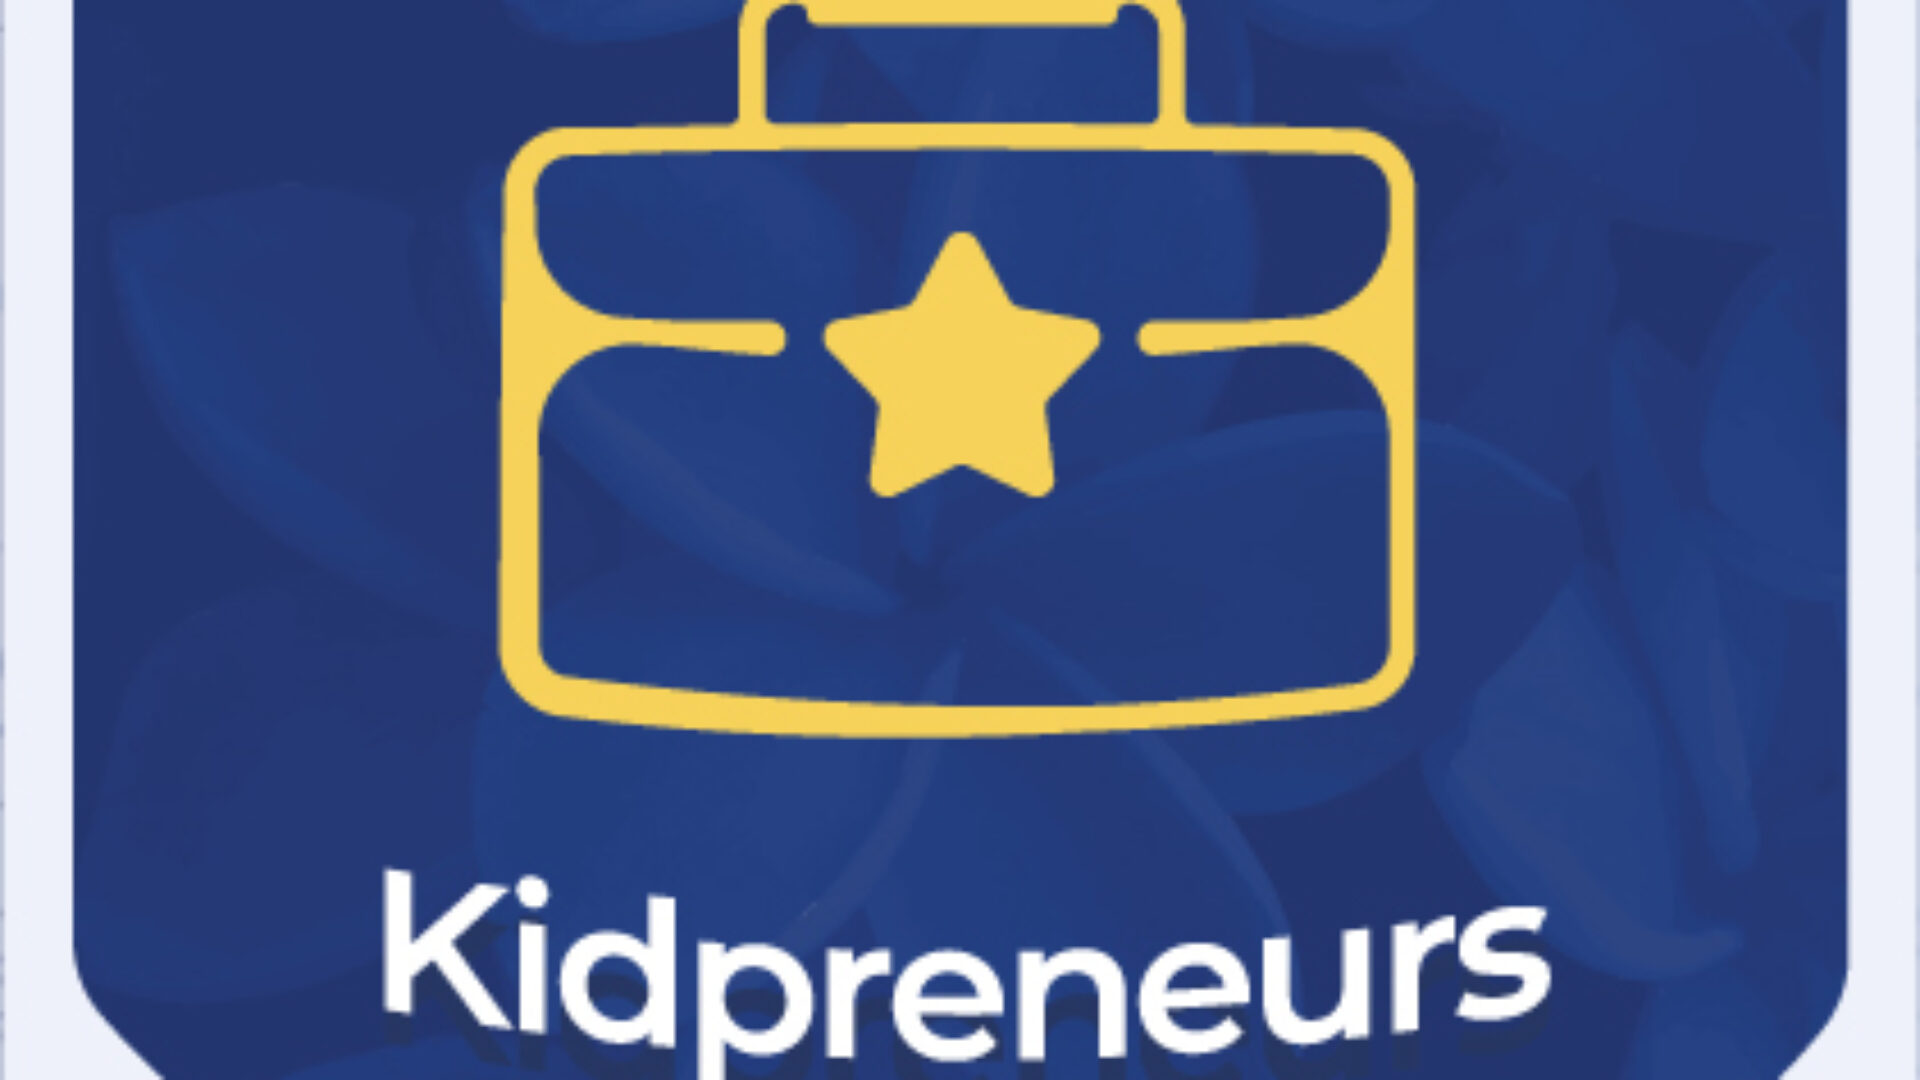 Kidpreneurs | Taking a step to start something you believe in